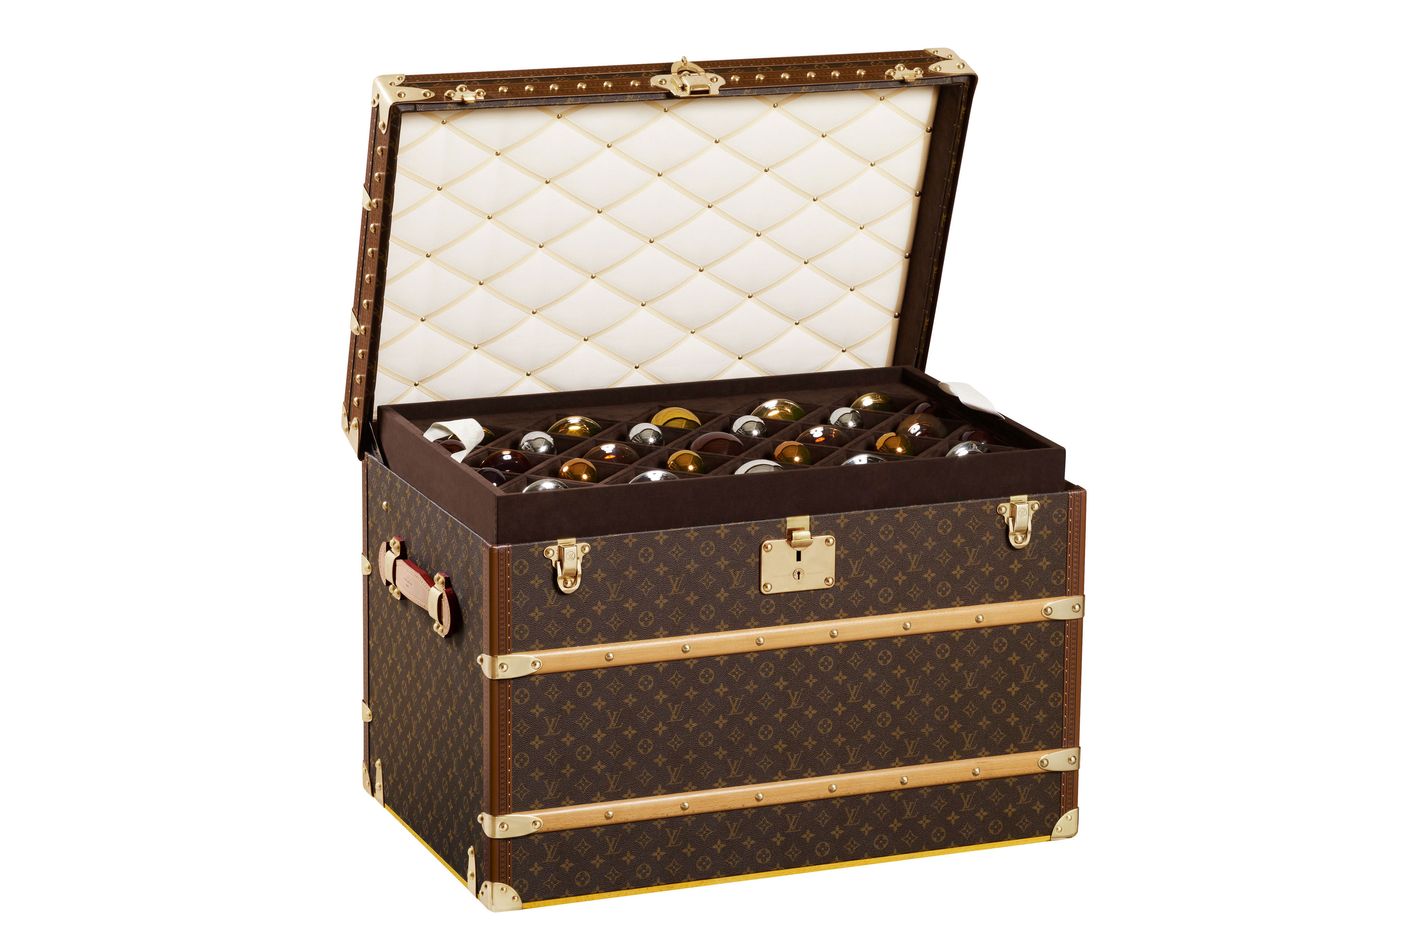 LV Luxurious Box